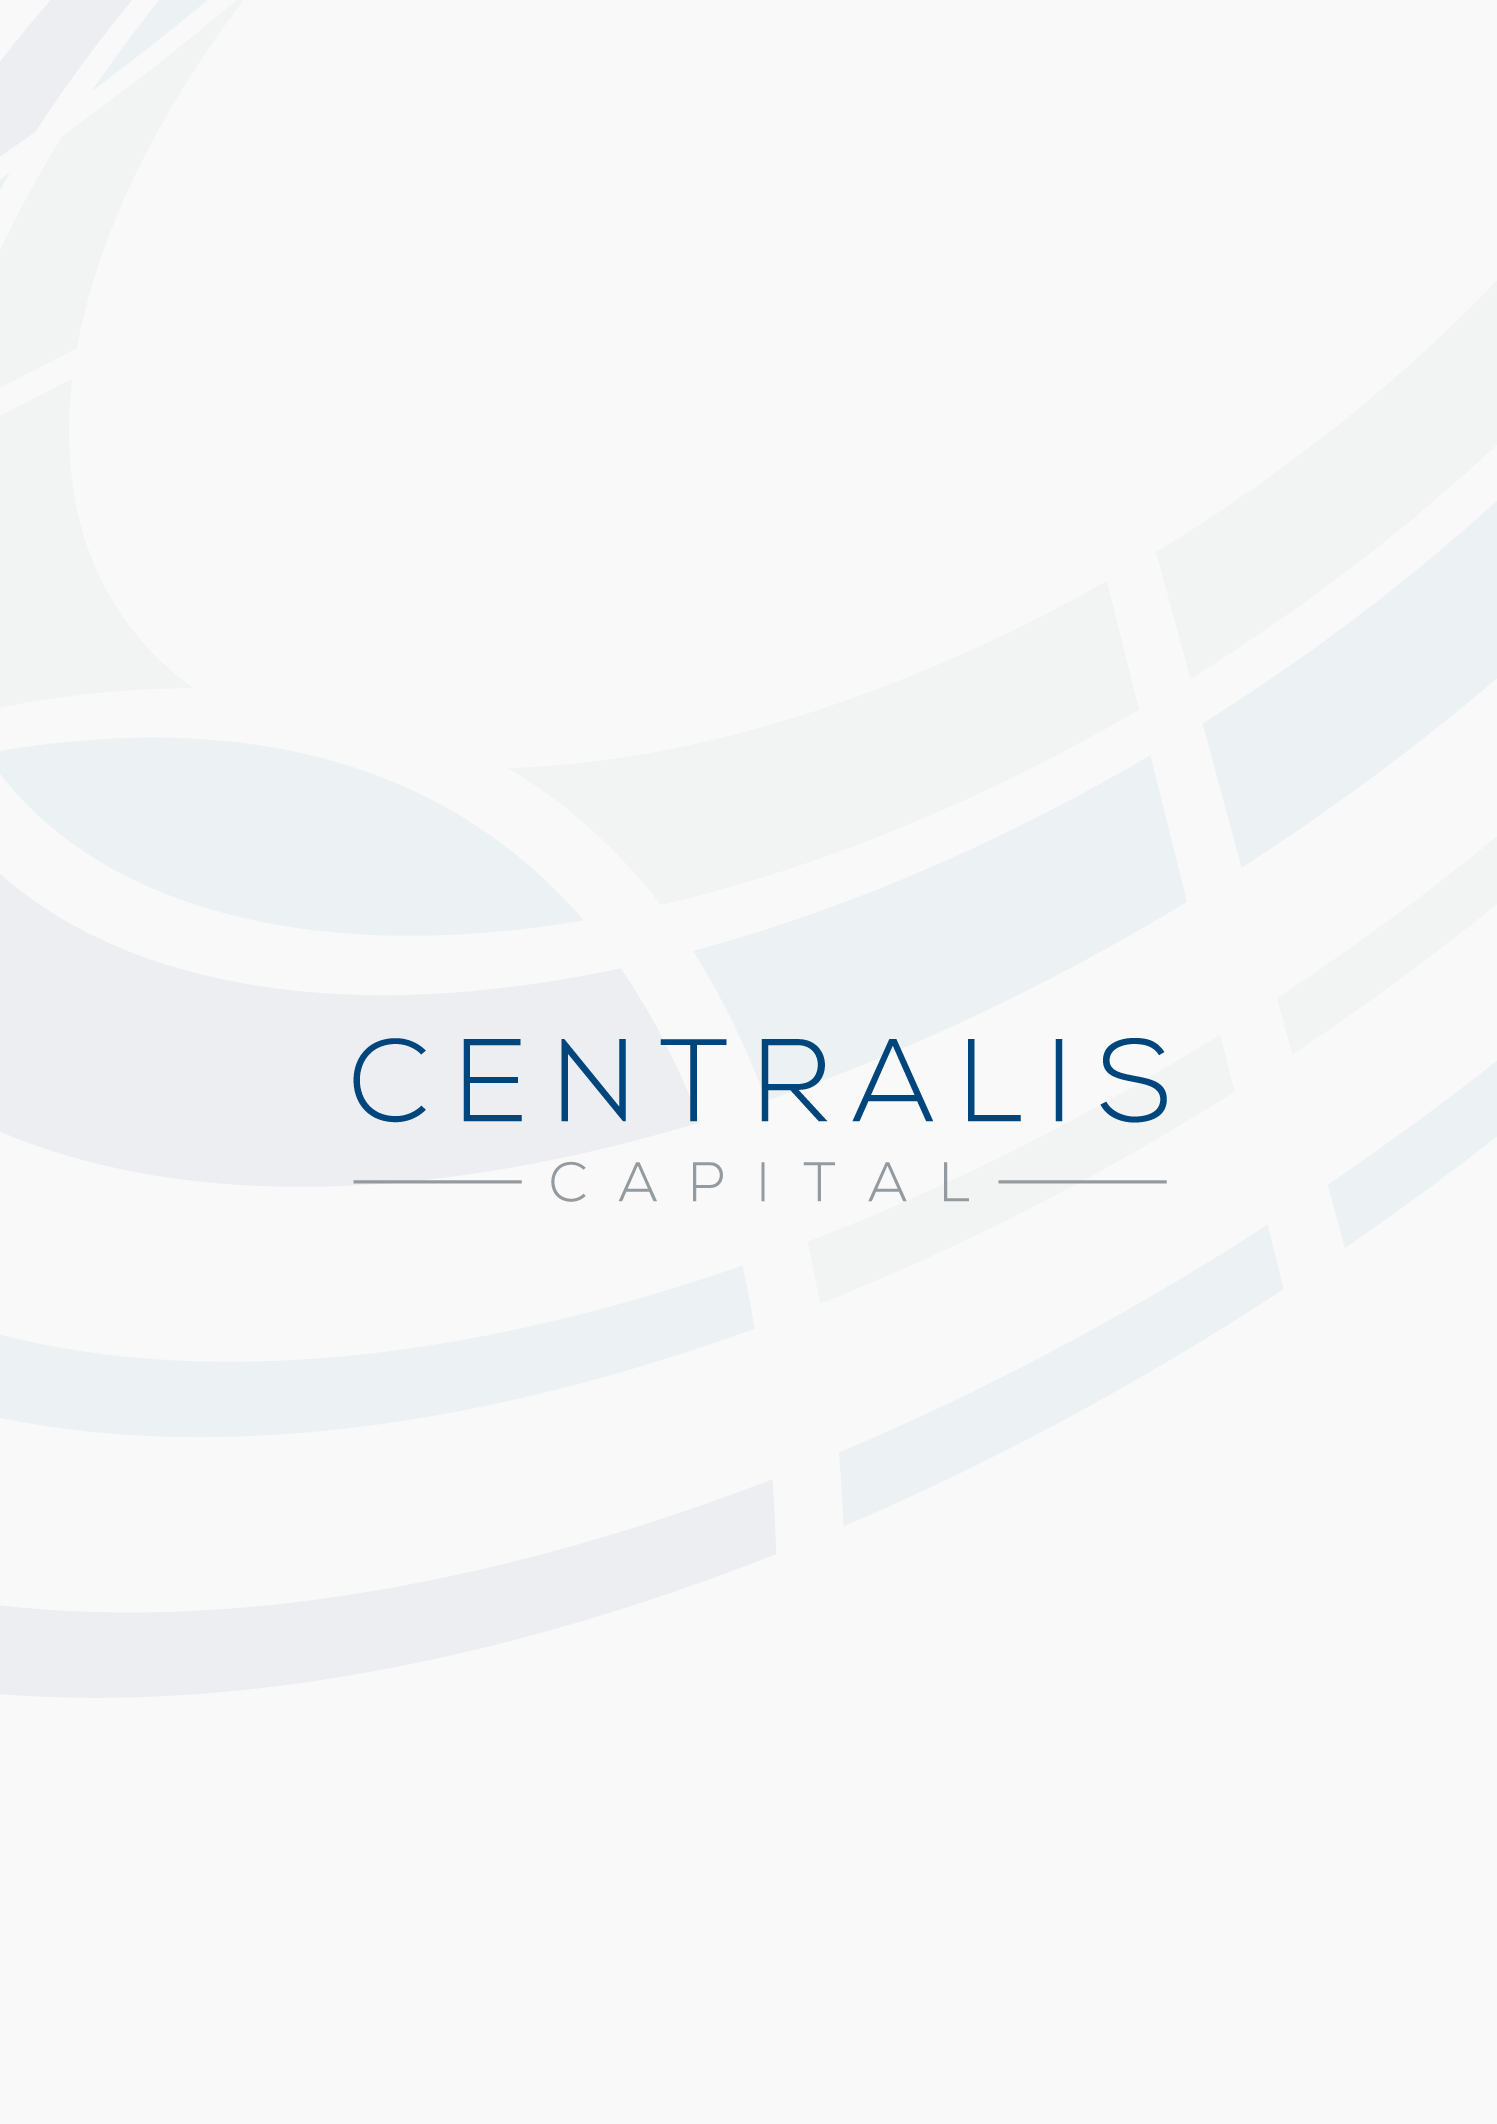 Centralis Capital